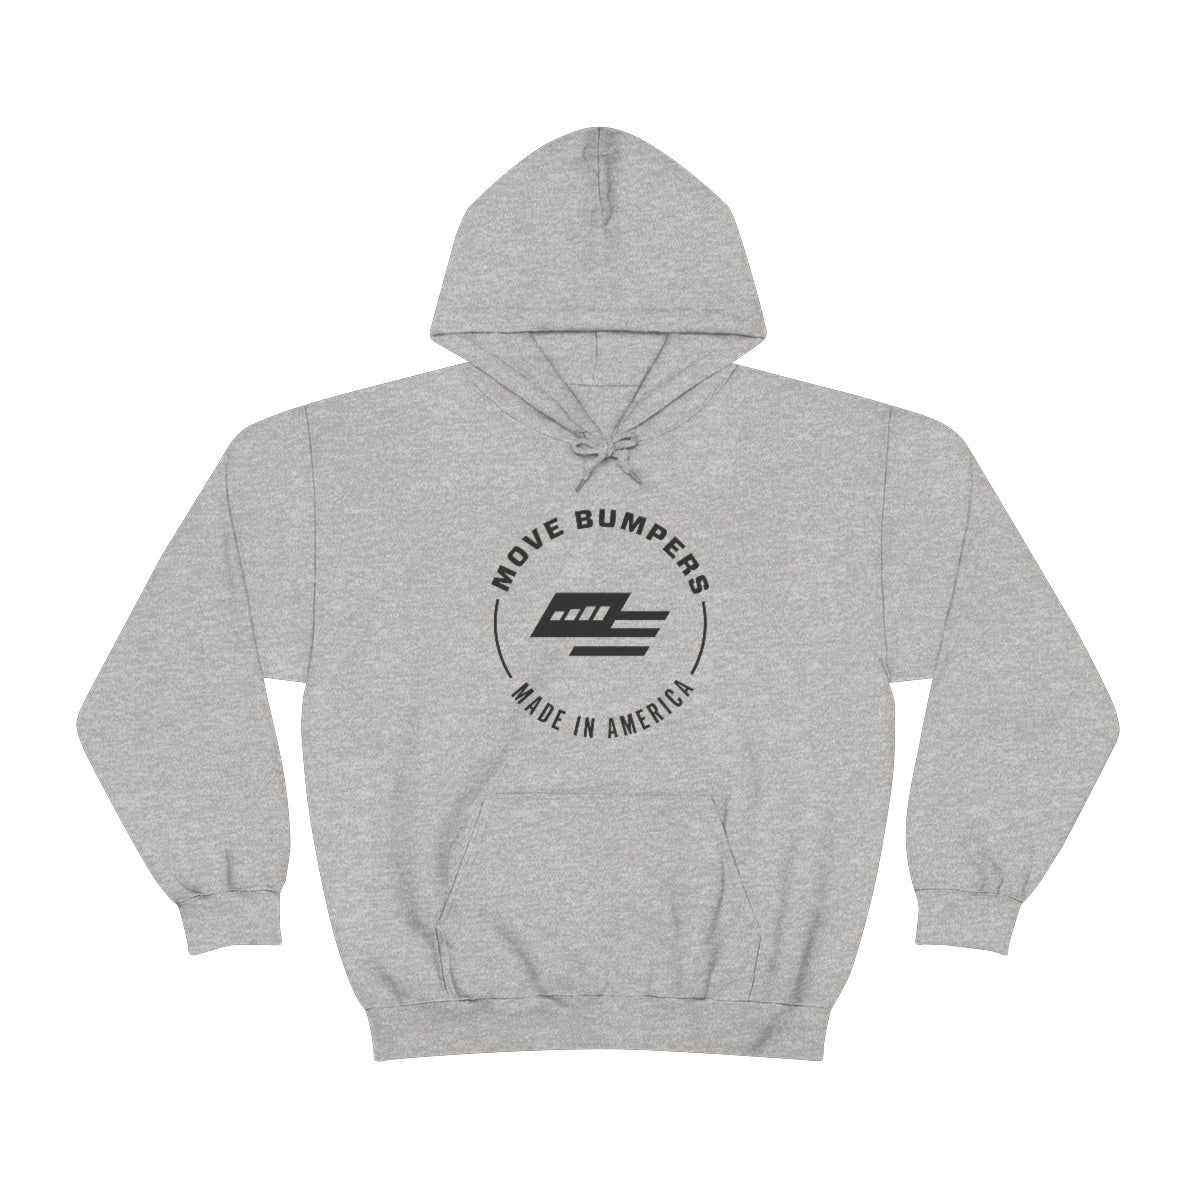 MOVE Bumpers Hooded Sweatshirt - Gray